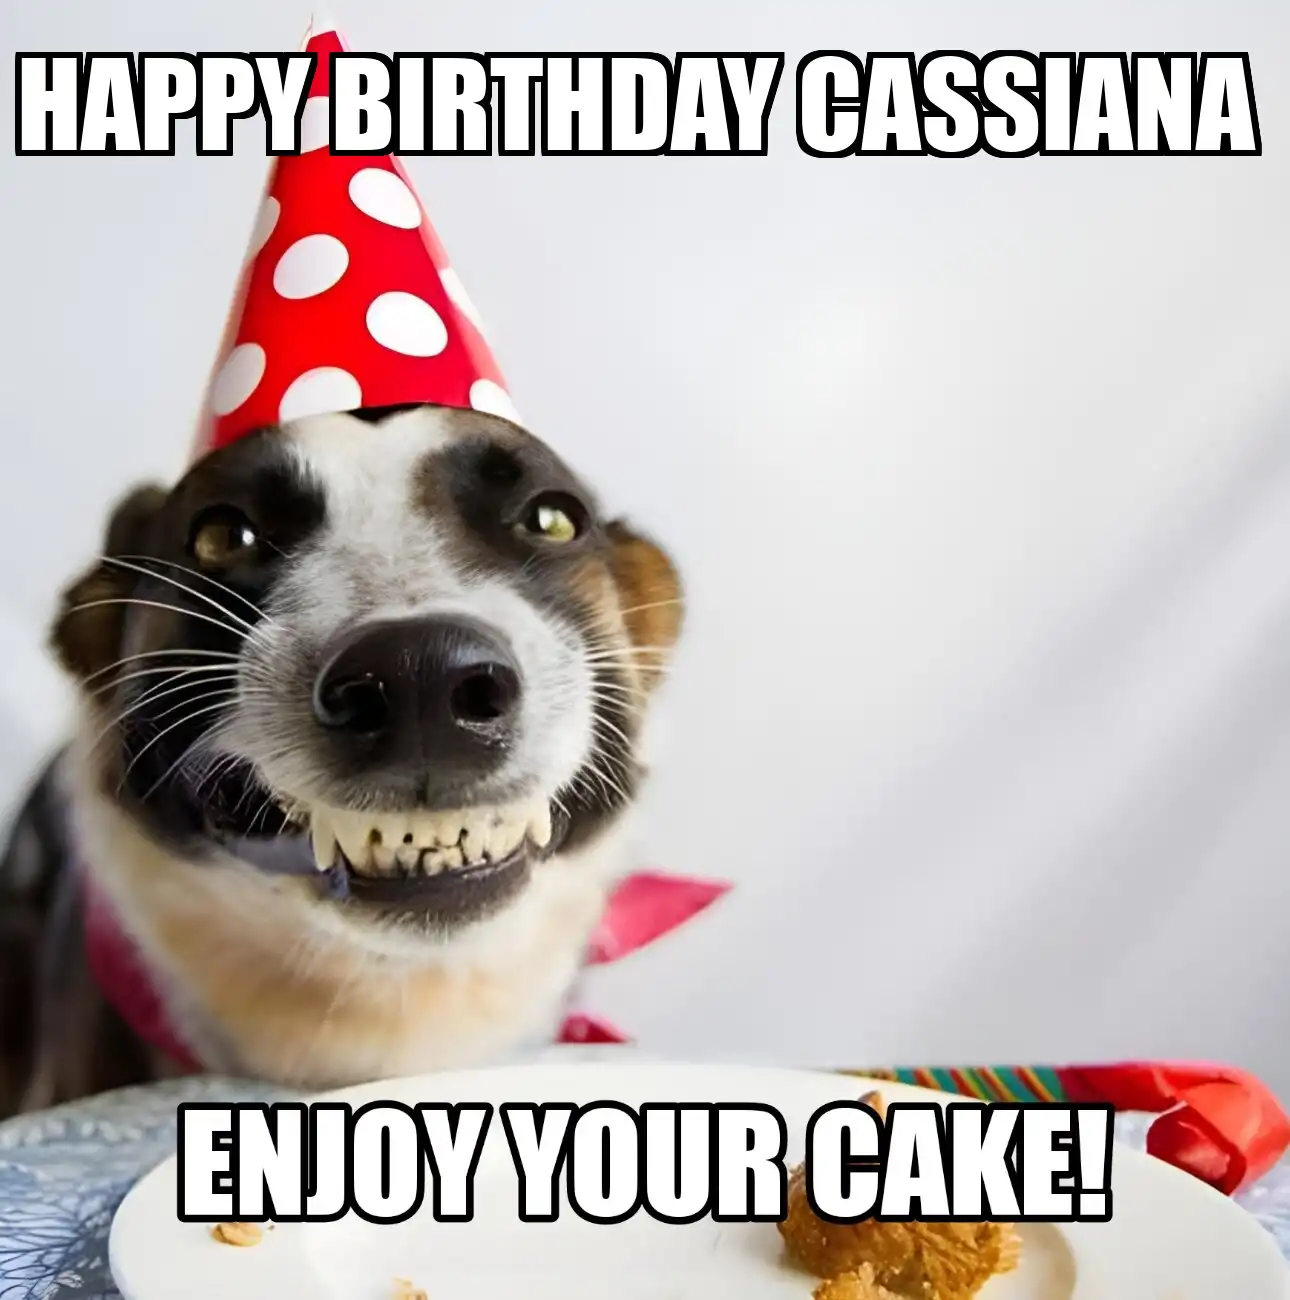 Happy Birthday Cassiana Enjoy Your Cake Dog Meme